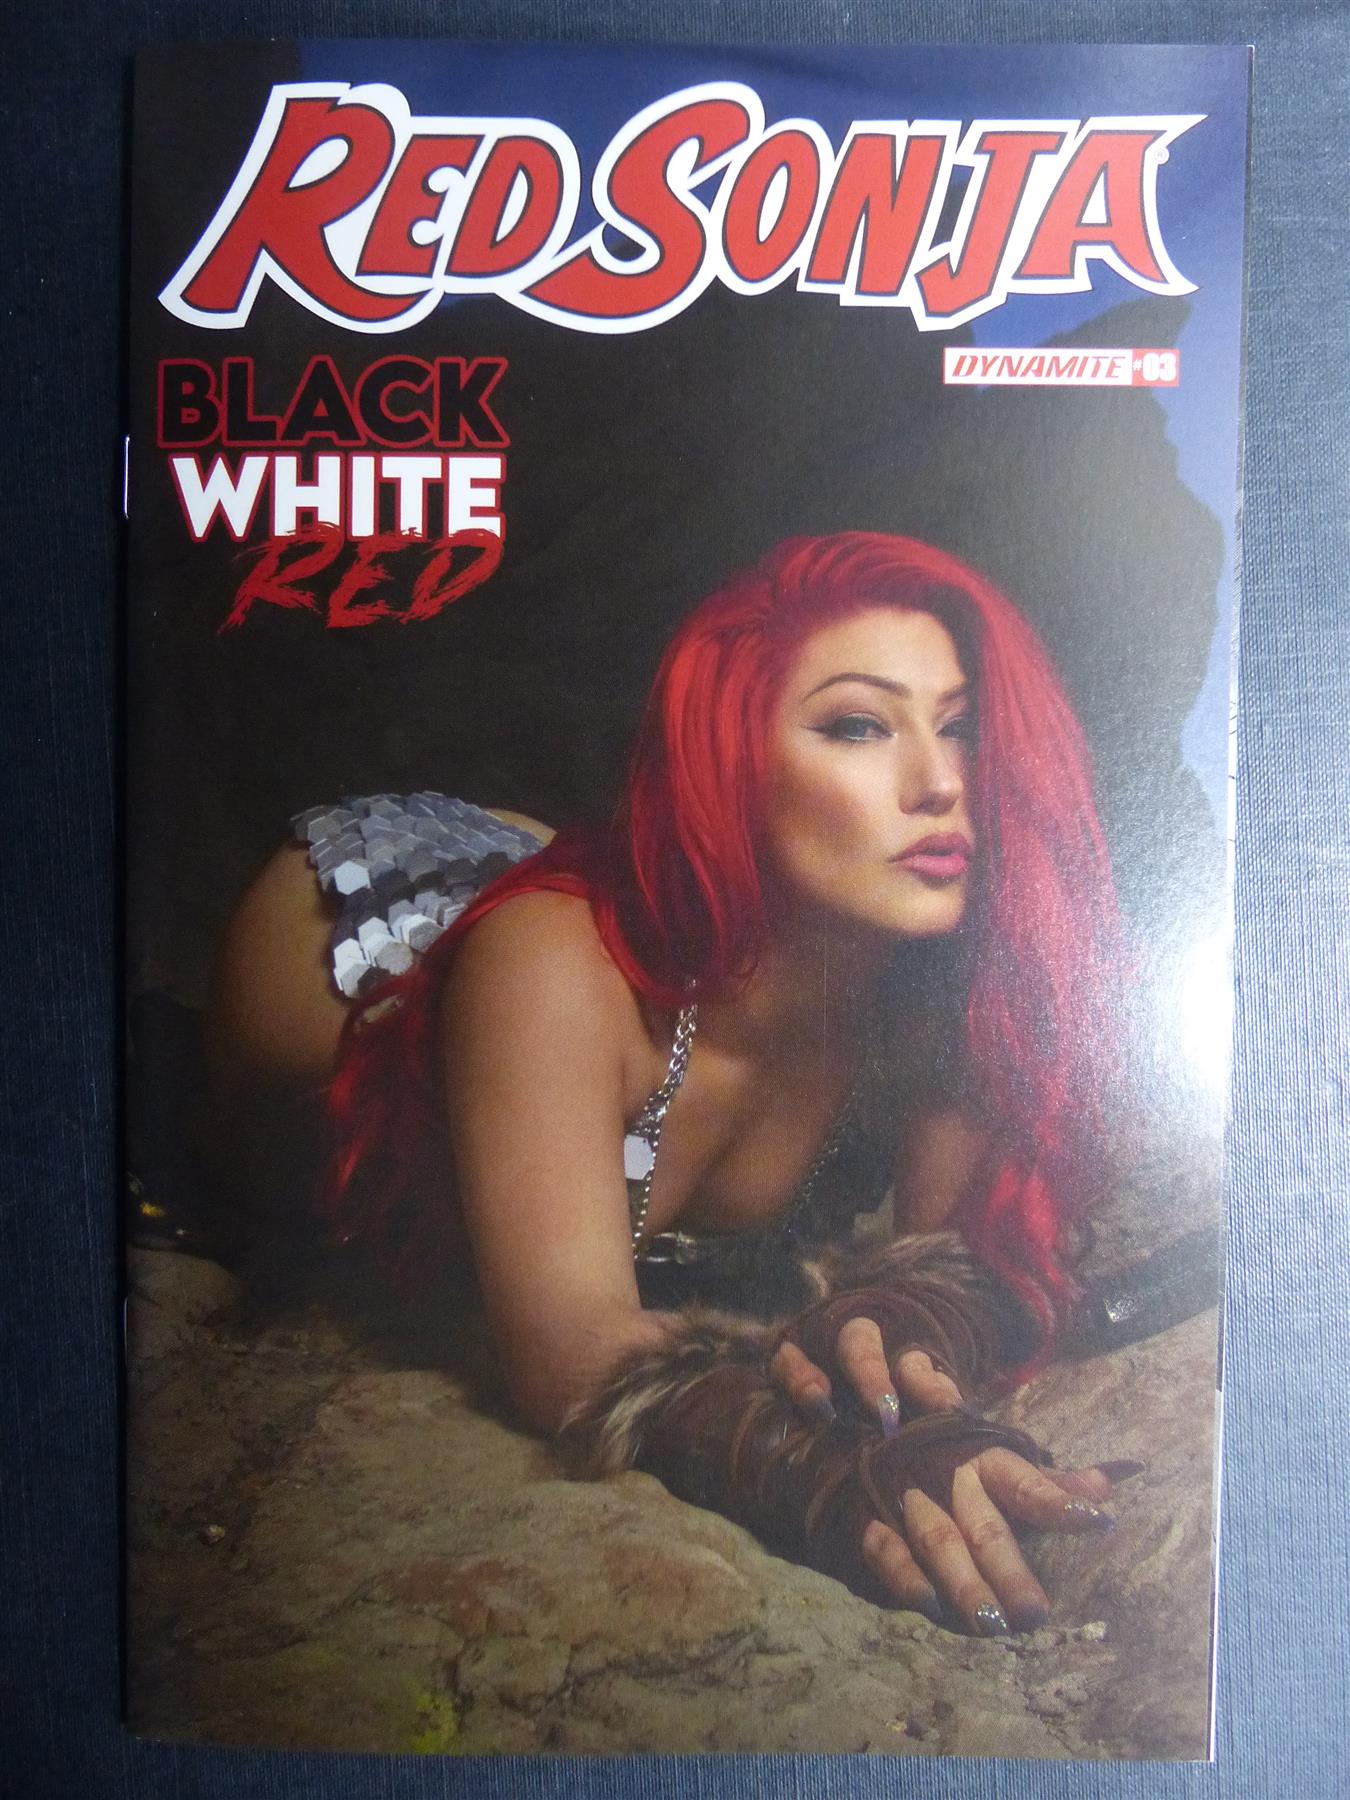 RED Sonja: Black White & Red #3 cosplay cvr - Sept 2021 - Dynamite Comics #3QL